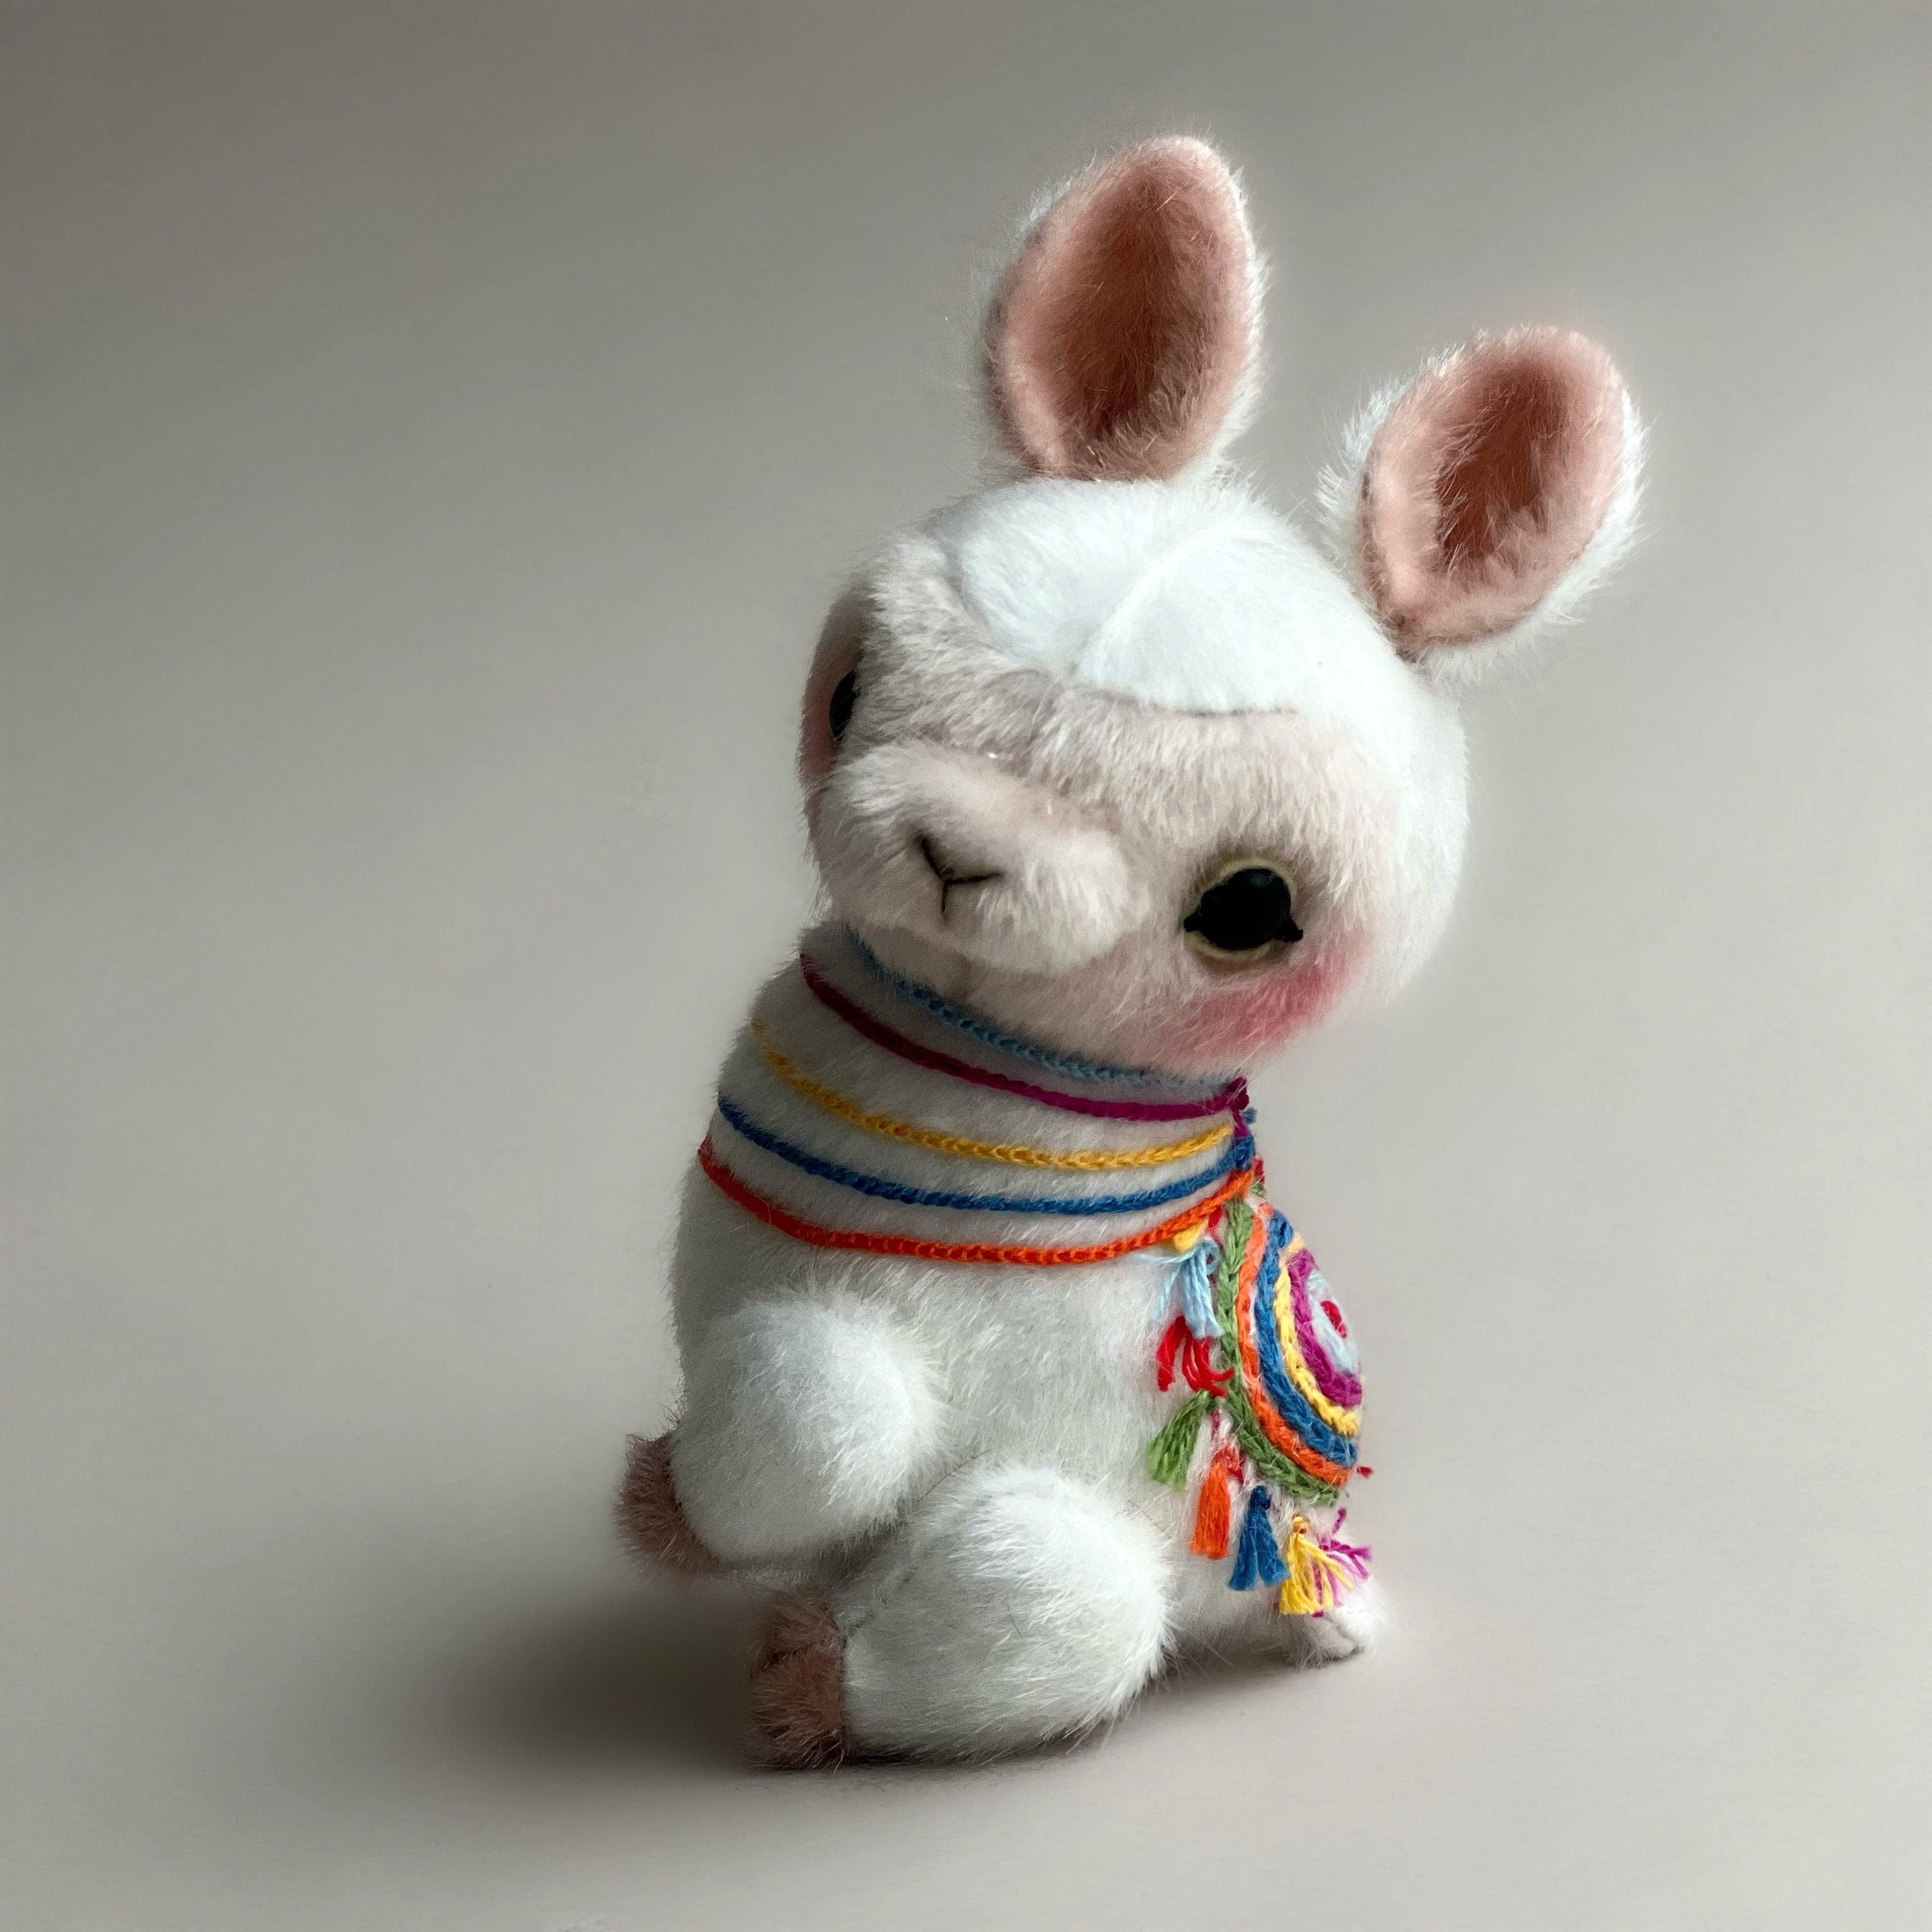 Alpaca Lama PDF sewing pattern, Alpaka Video tutorial DIY stuffed toy pattern kids Bestseller easy to sew gift for creative friend